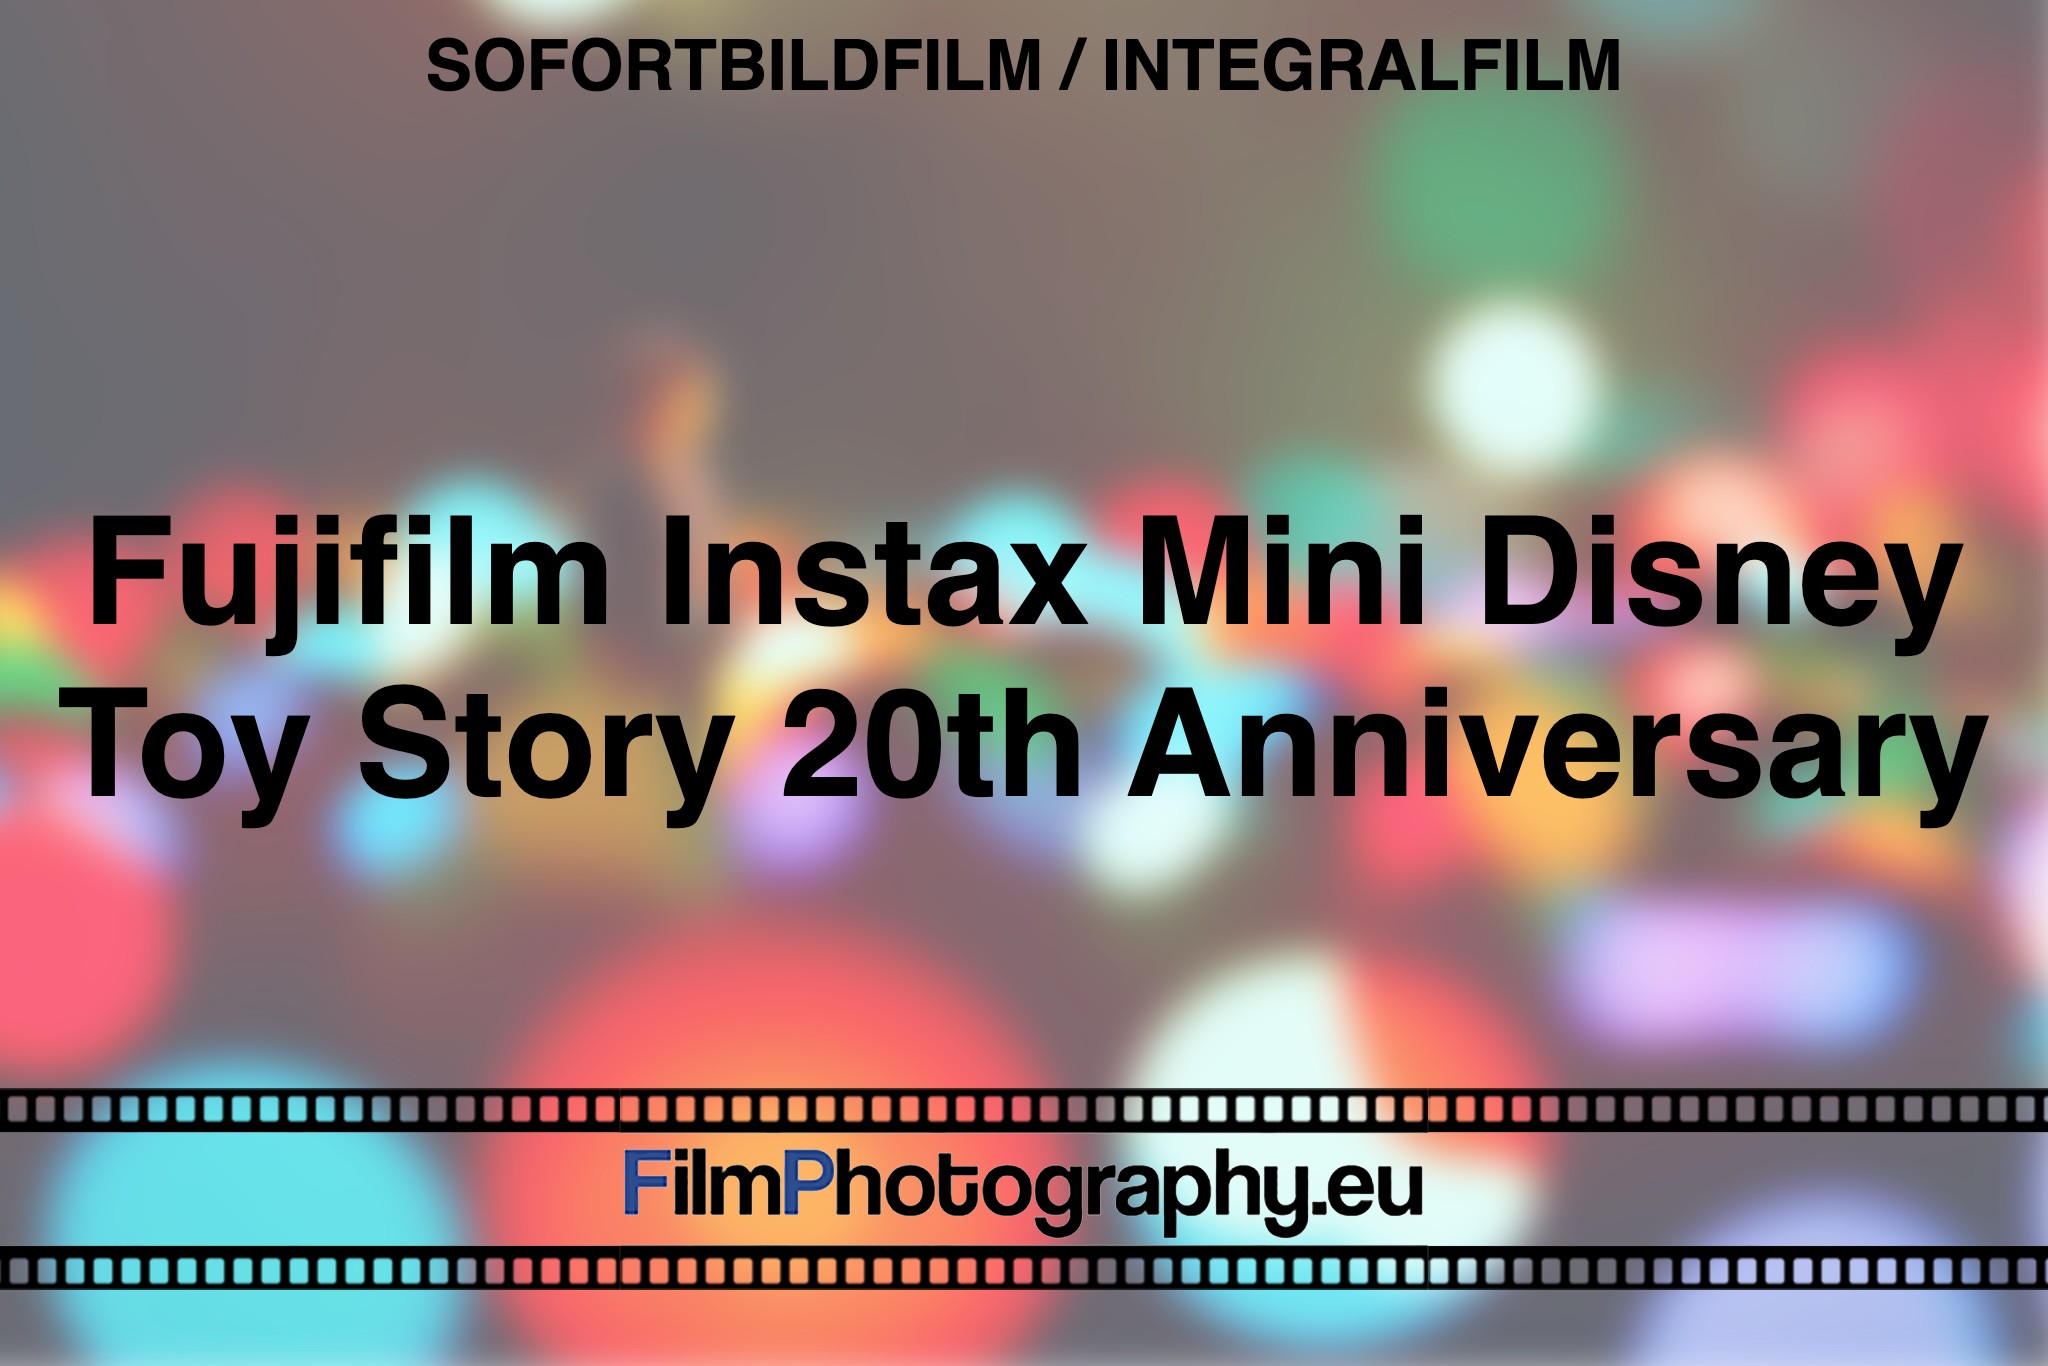 fujifilm-instax-mini-disney-toy-story-20th-anniversary-sofortbildfilm-integralfilm-fp-bnv